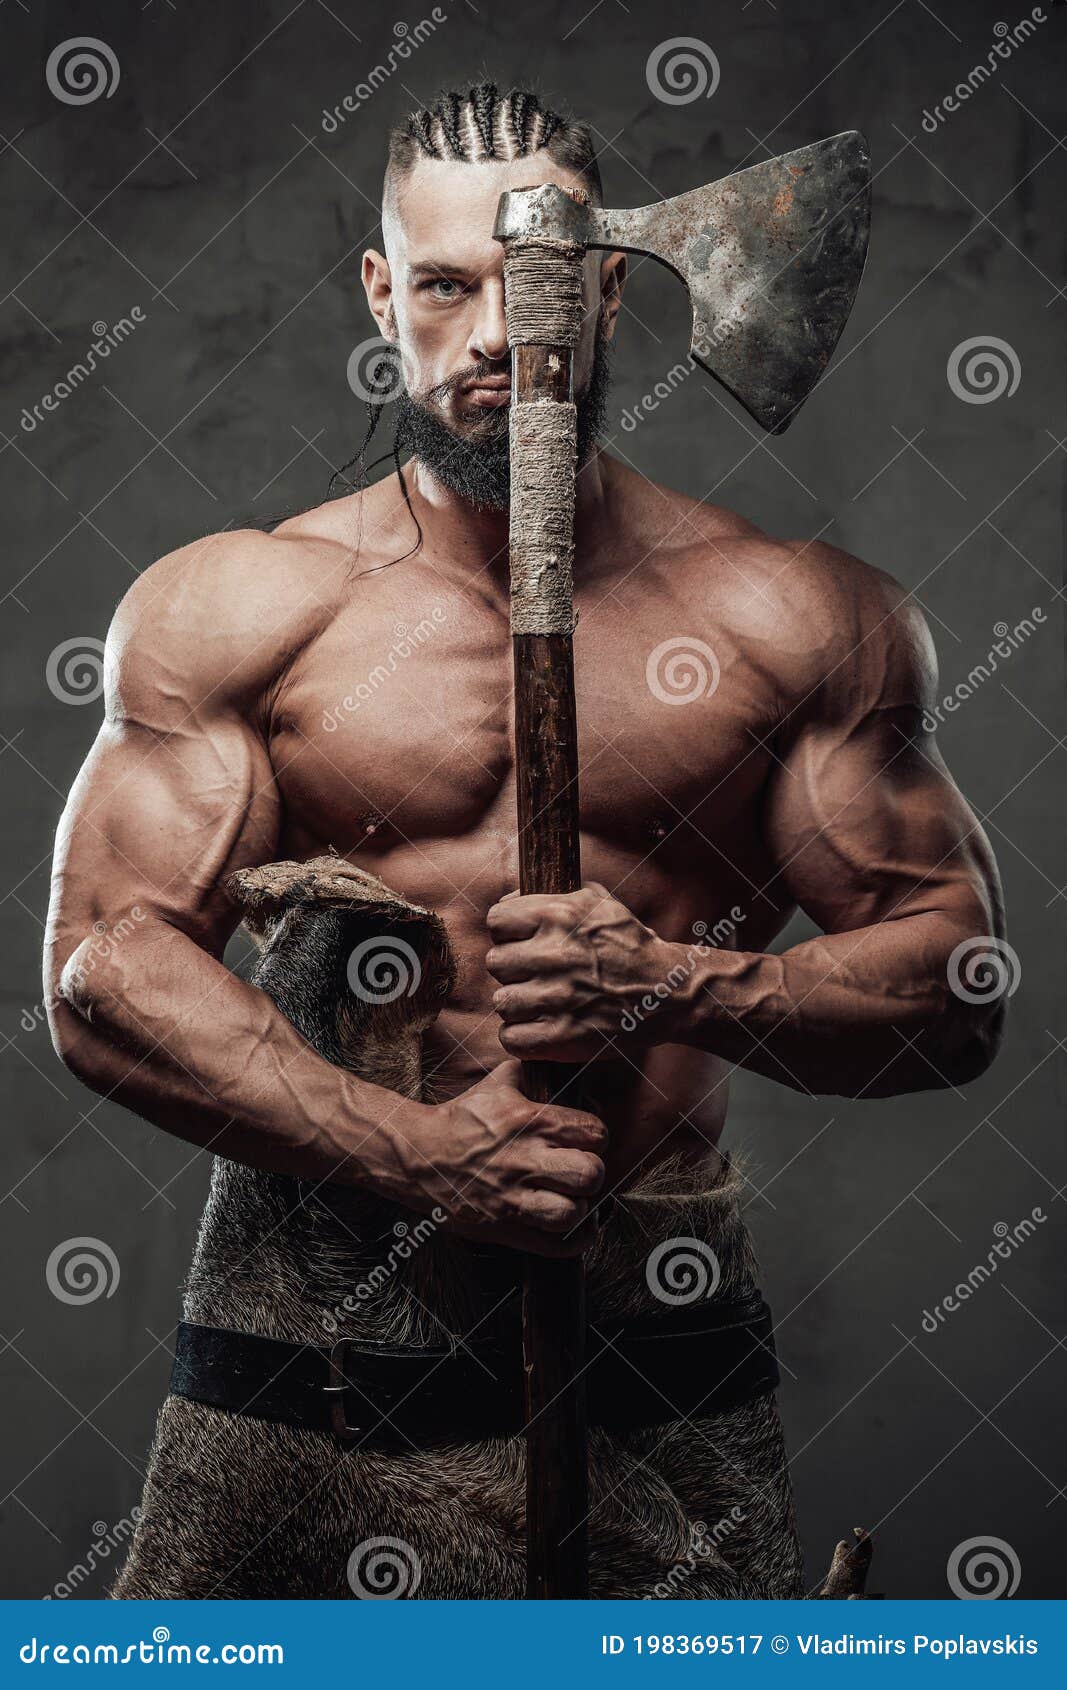 muscular guy dressed like viking posing in dark background